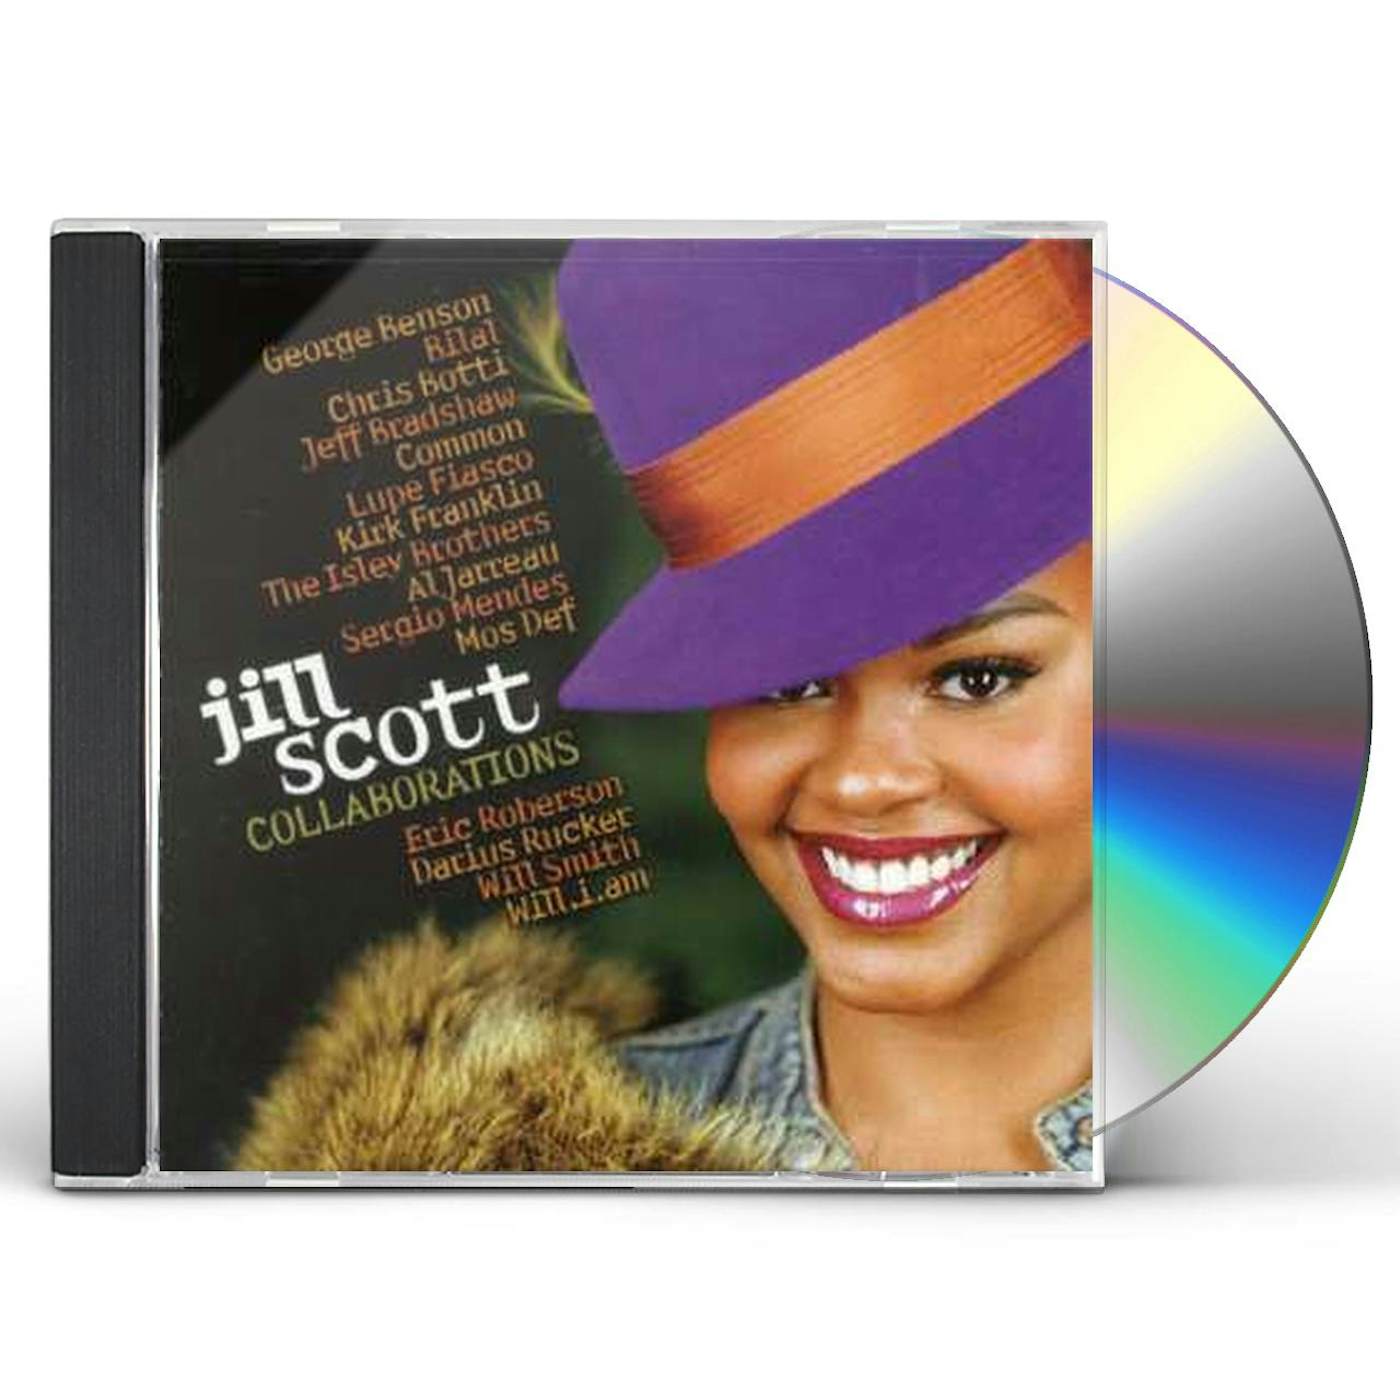 JILL SCOTT COLLABORATIONS CD